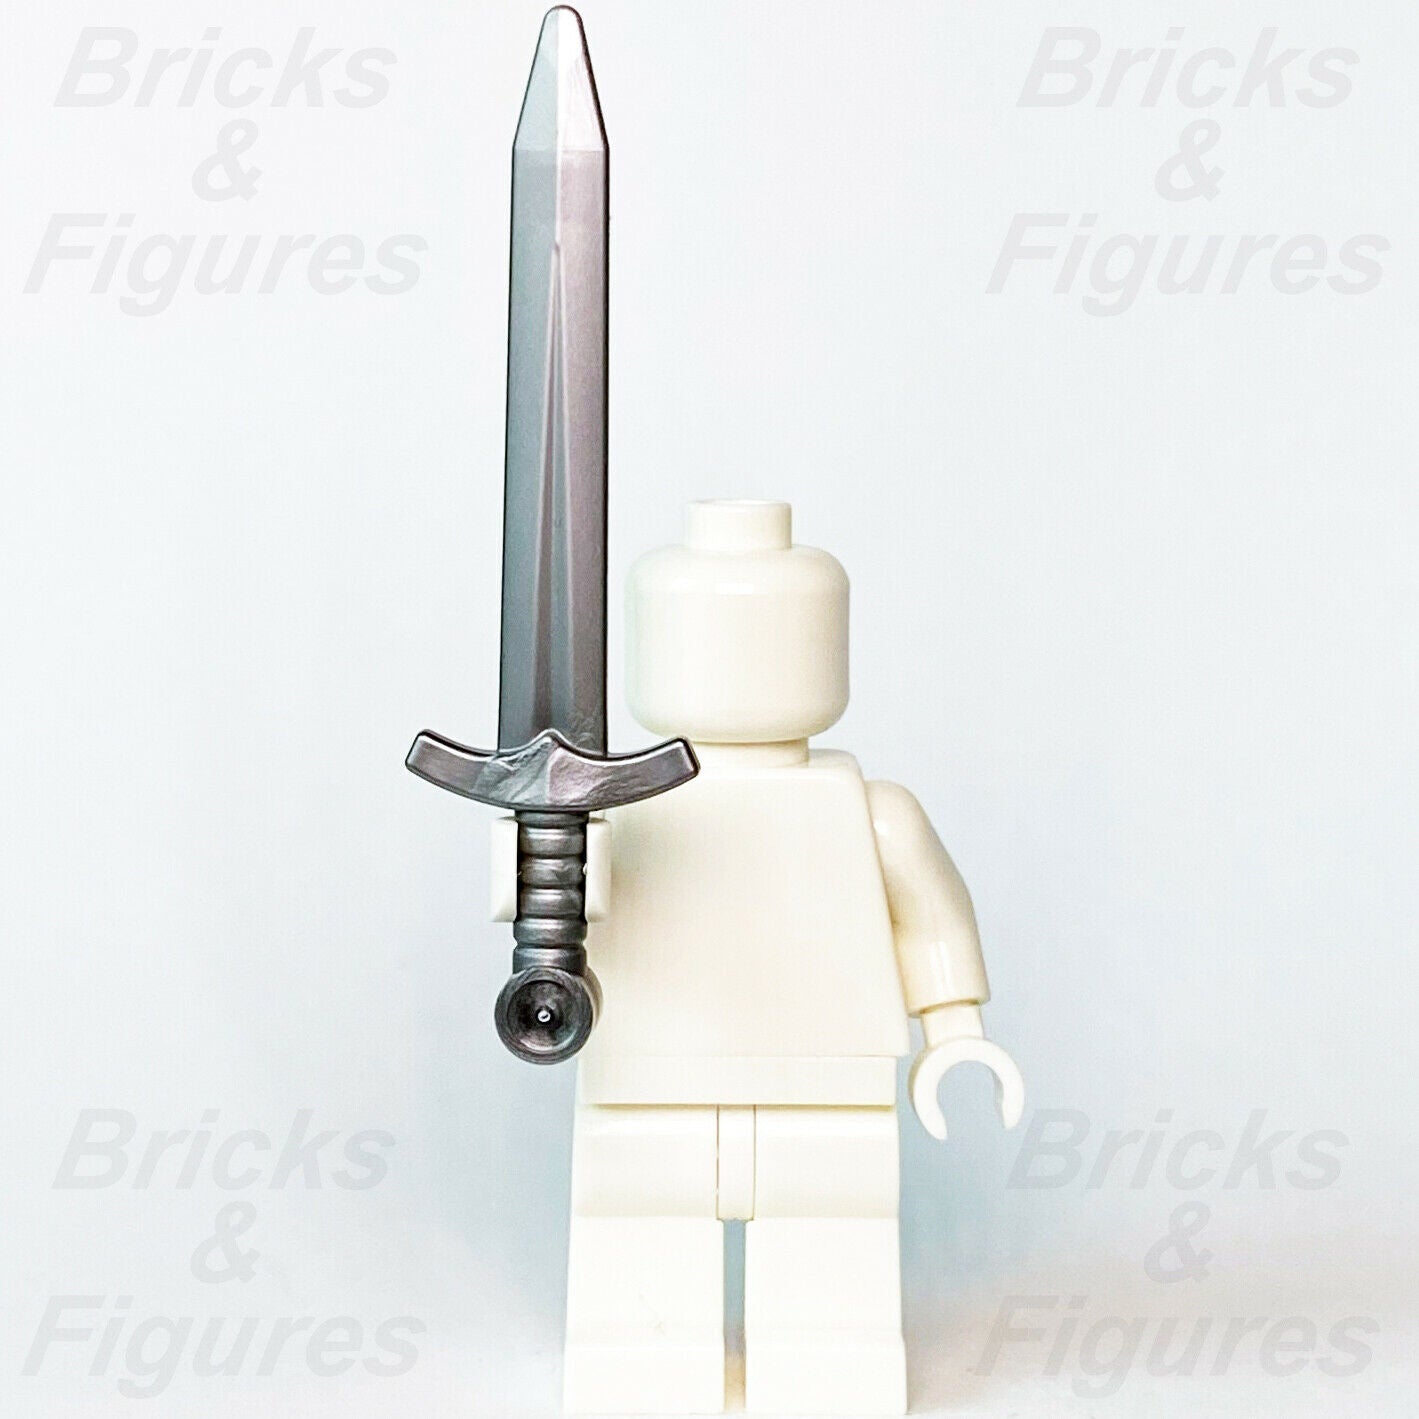 5 x Ideas LEGO Greatsword Knight Swords Blades Minifigure Weapon Part 21325 - Bricks & Figures